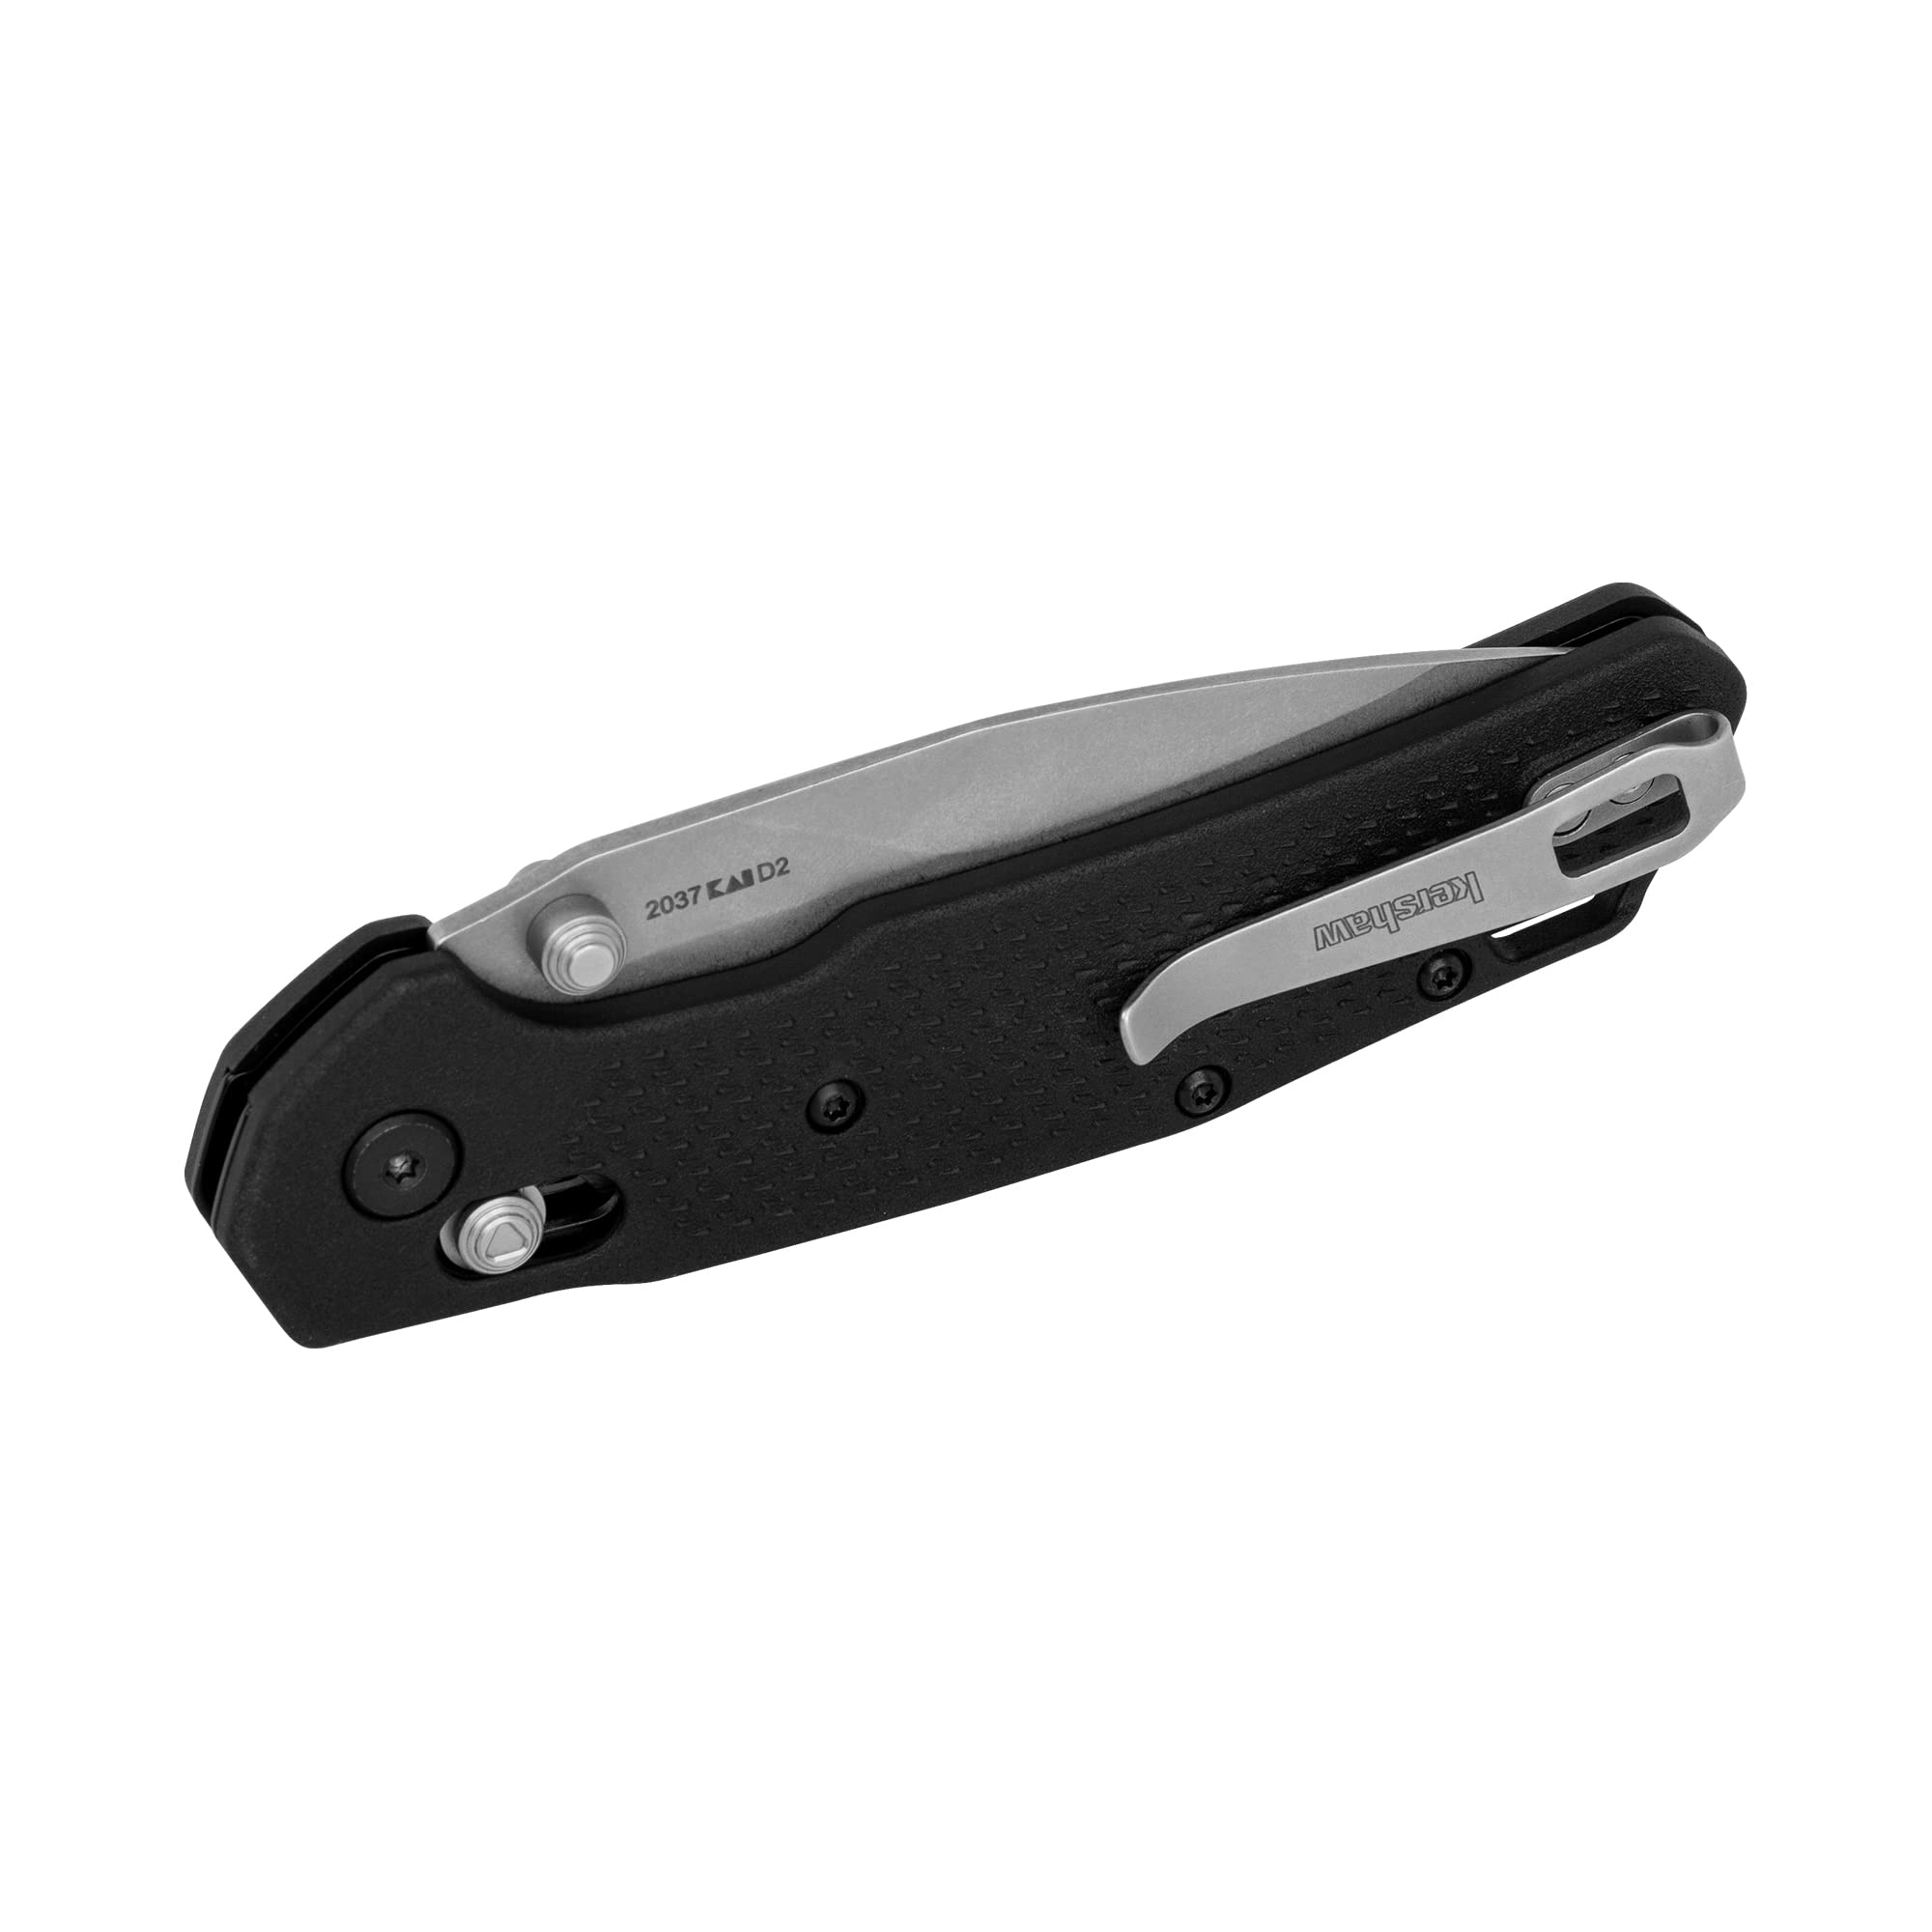 Kershaw Heist Folding Pocket Knife, 3.2 inch Clip Point D2 Steel Blade, Stonewashed Finish, DuraLock Locking Mechanism, Black